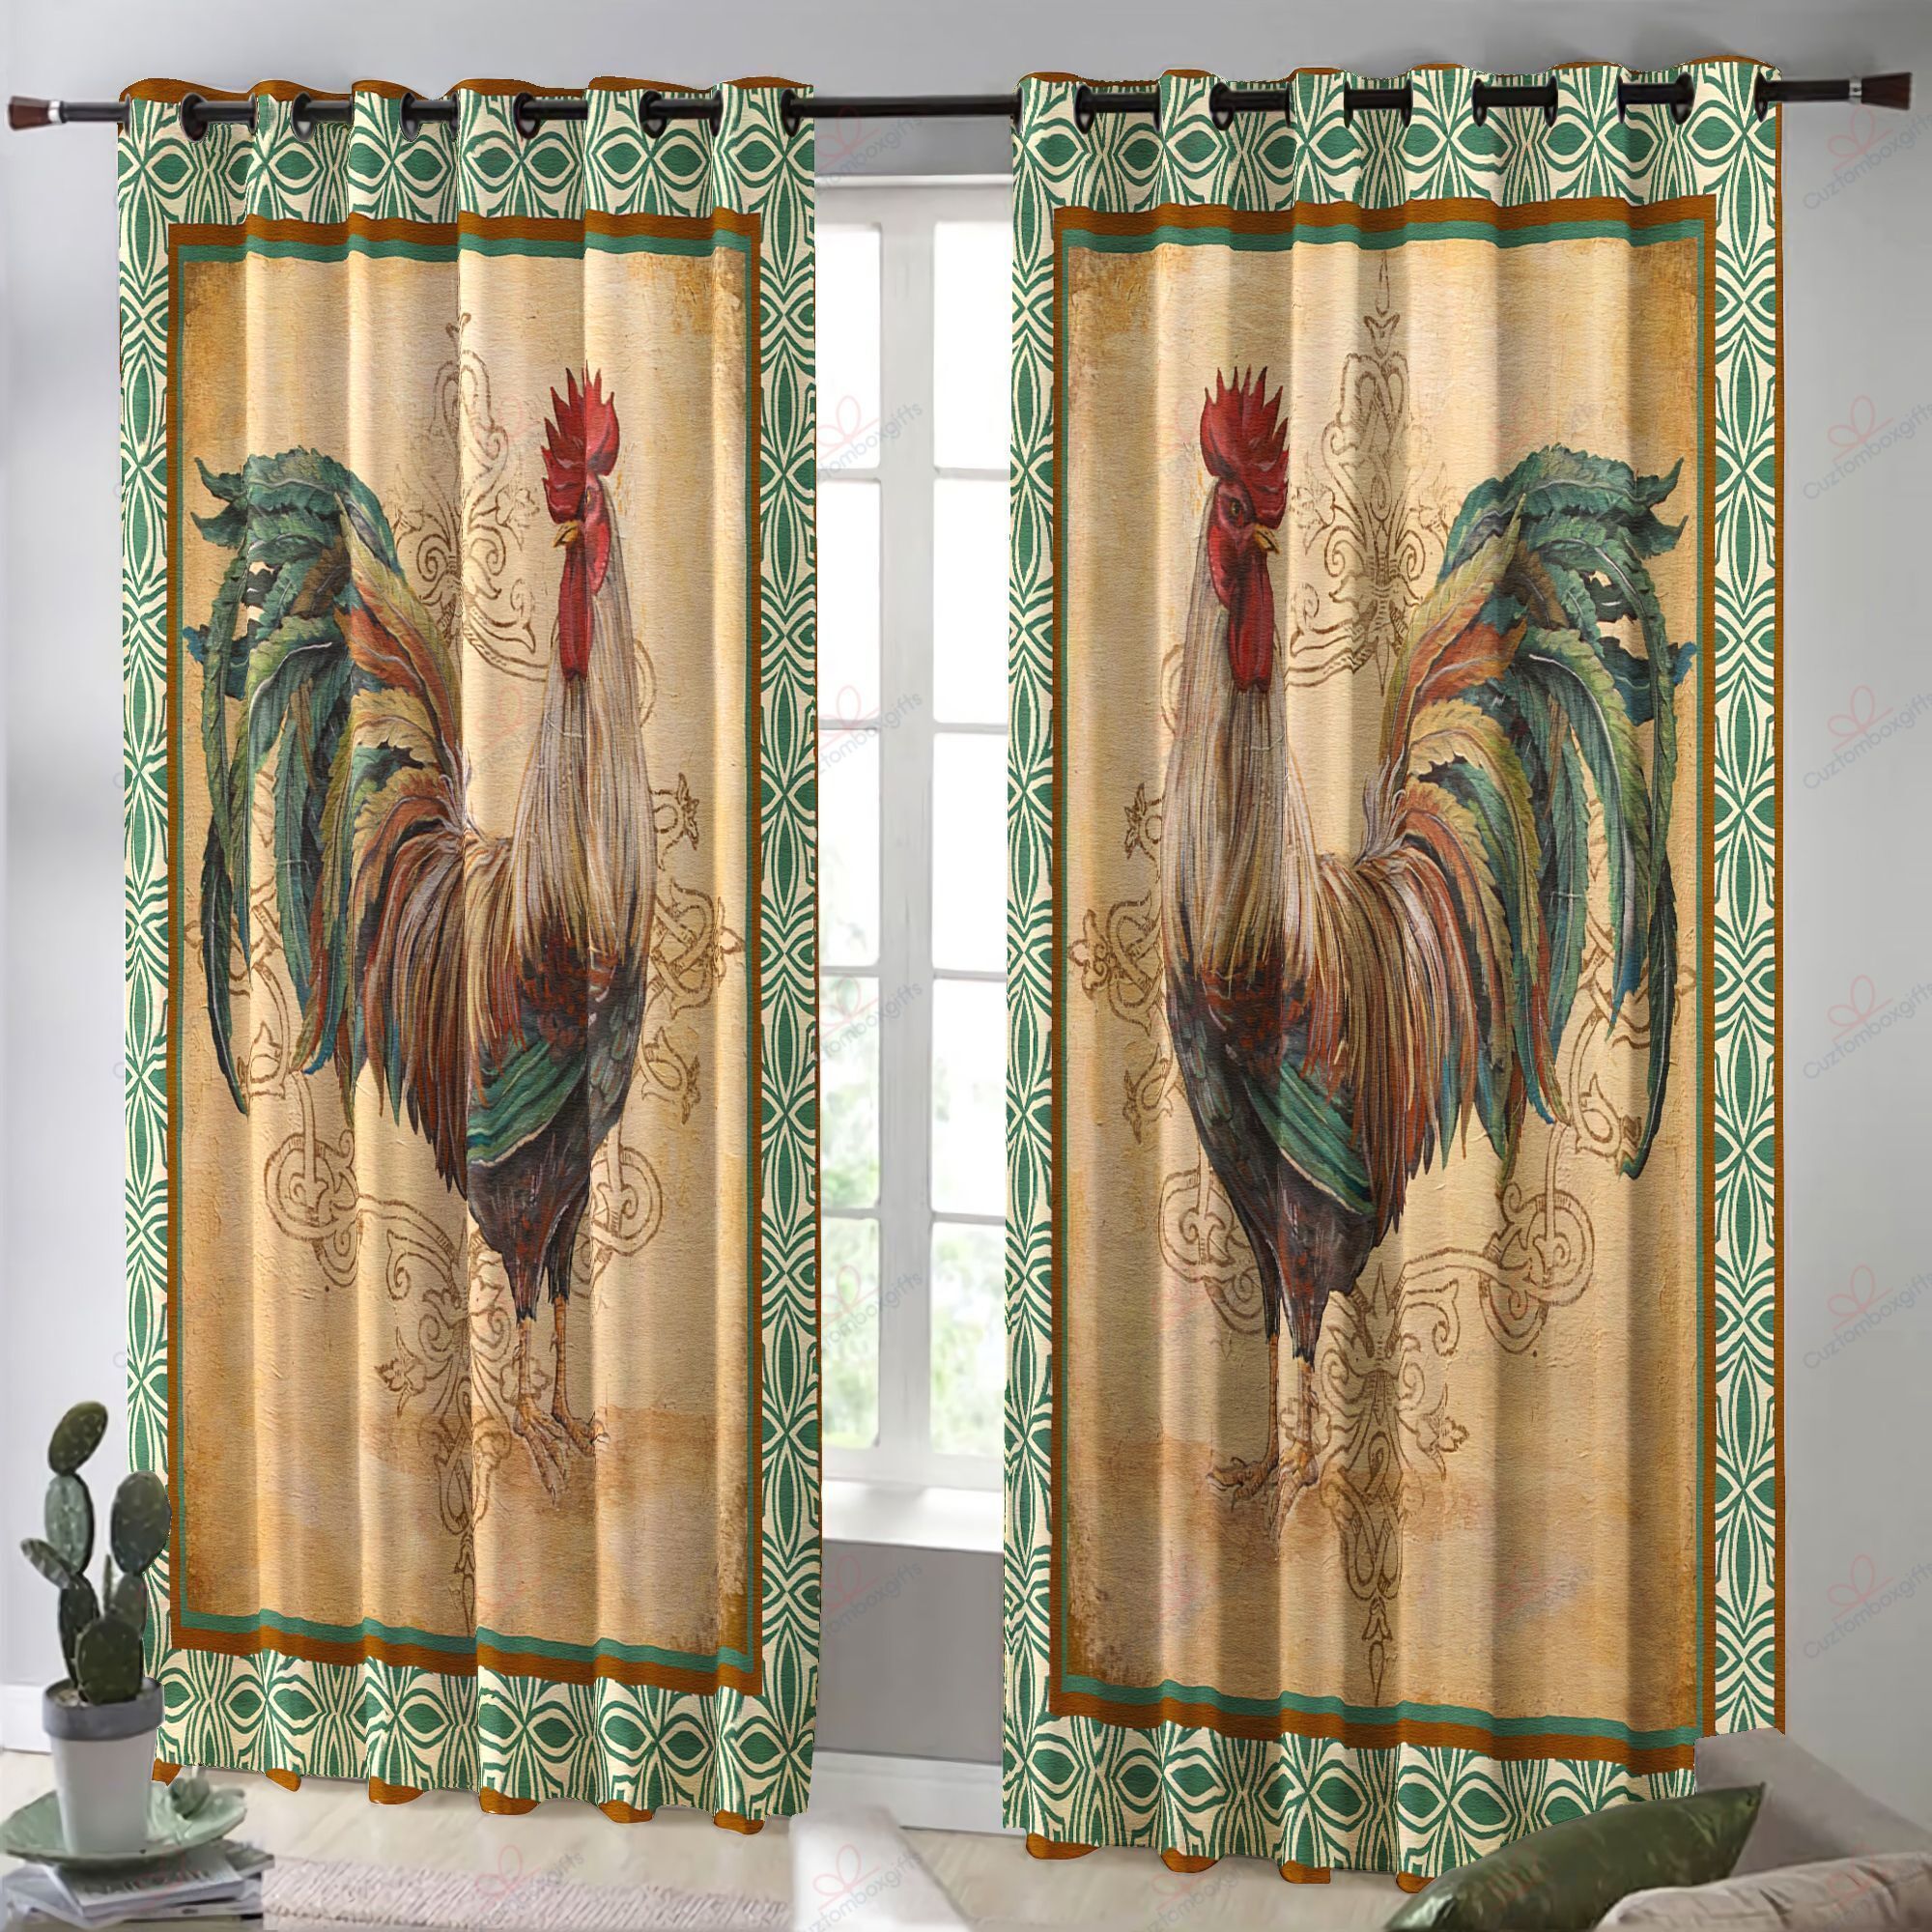 cock vintage printed window curtain home decor 1616